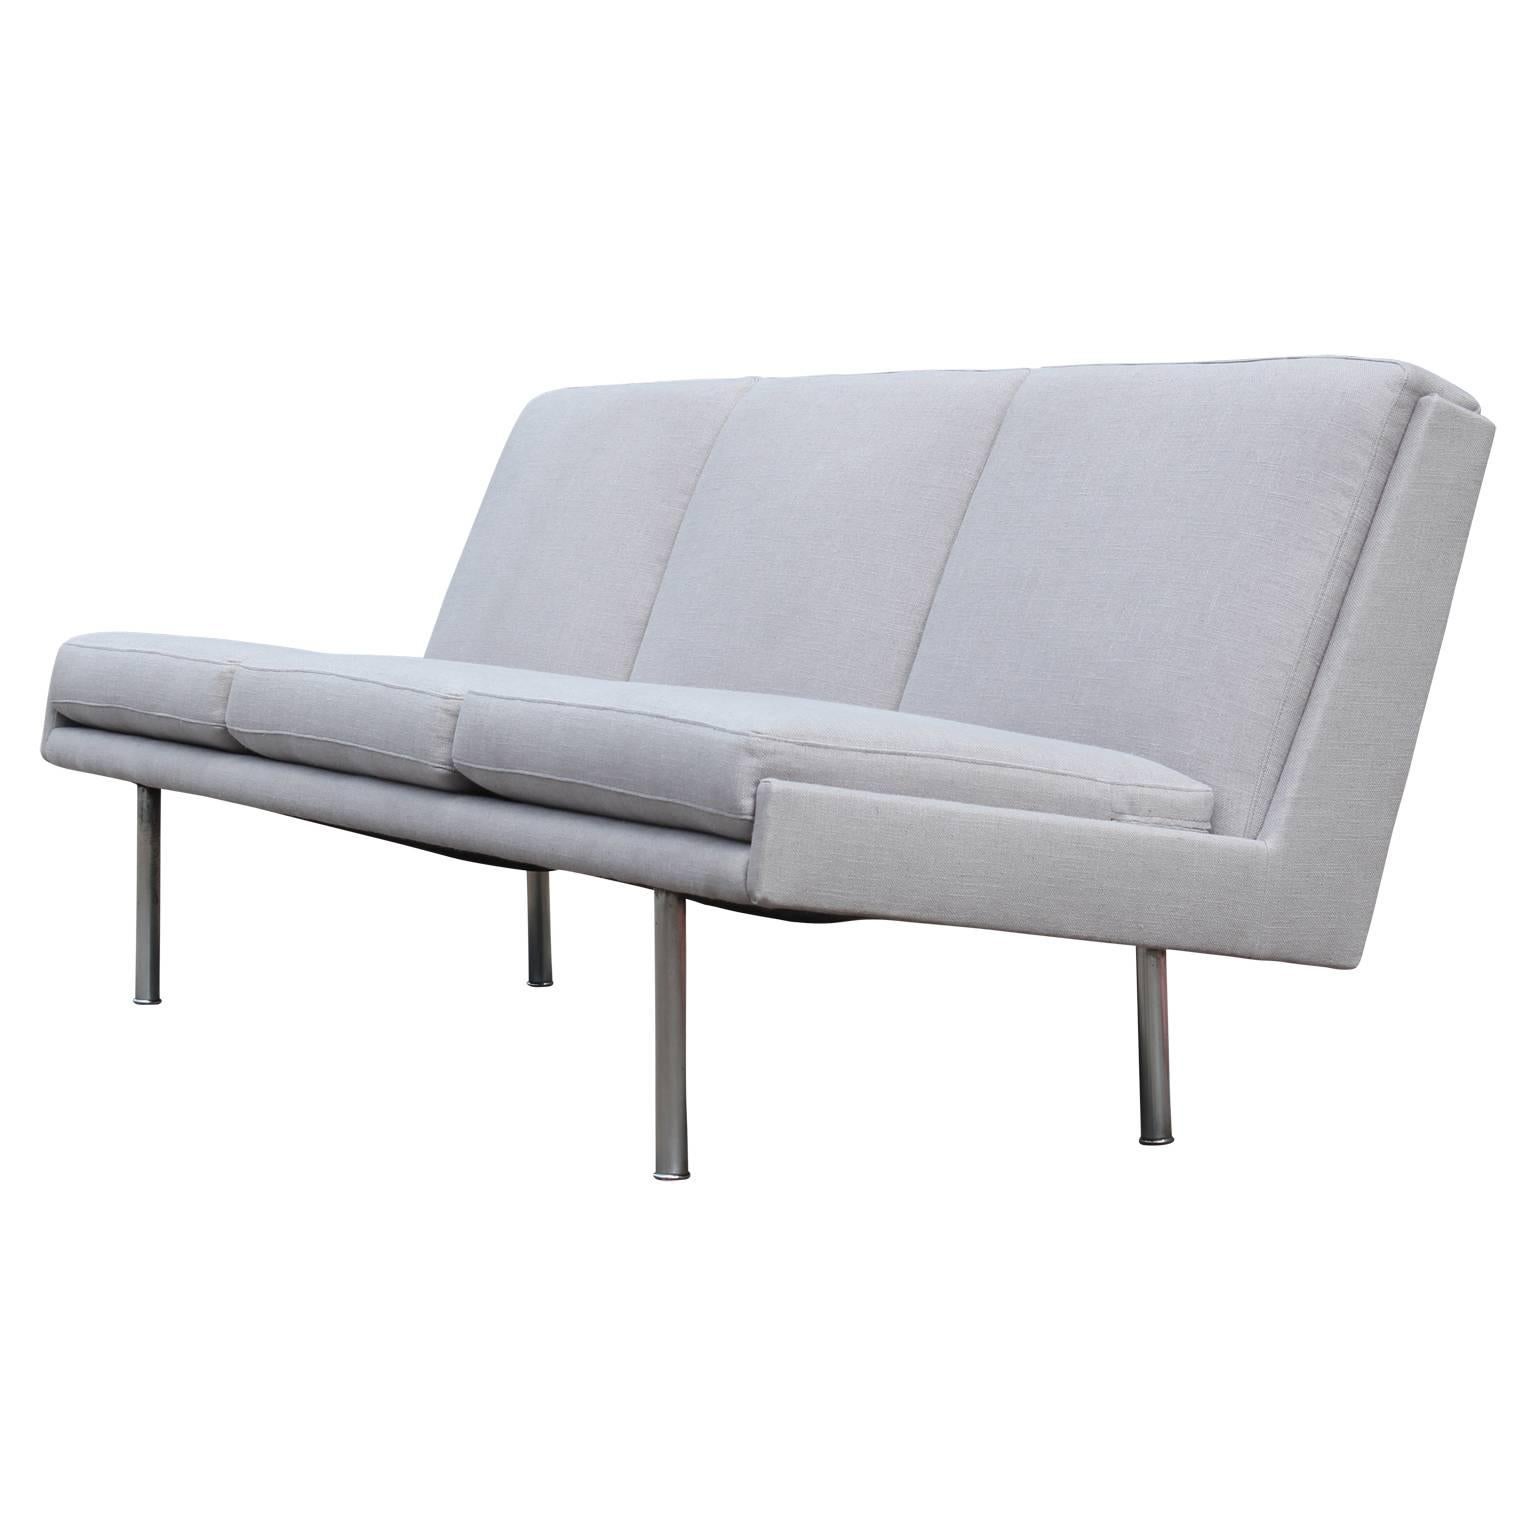 Danish Rare Hans Wegner Armless Three-Seat Sofa with Steel Legs in Light Grey Fabric